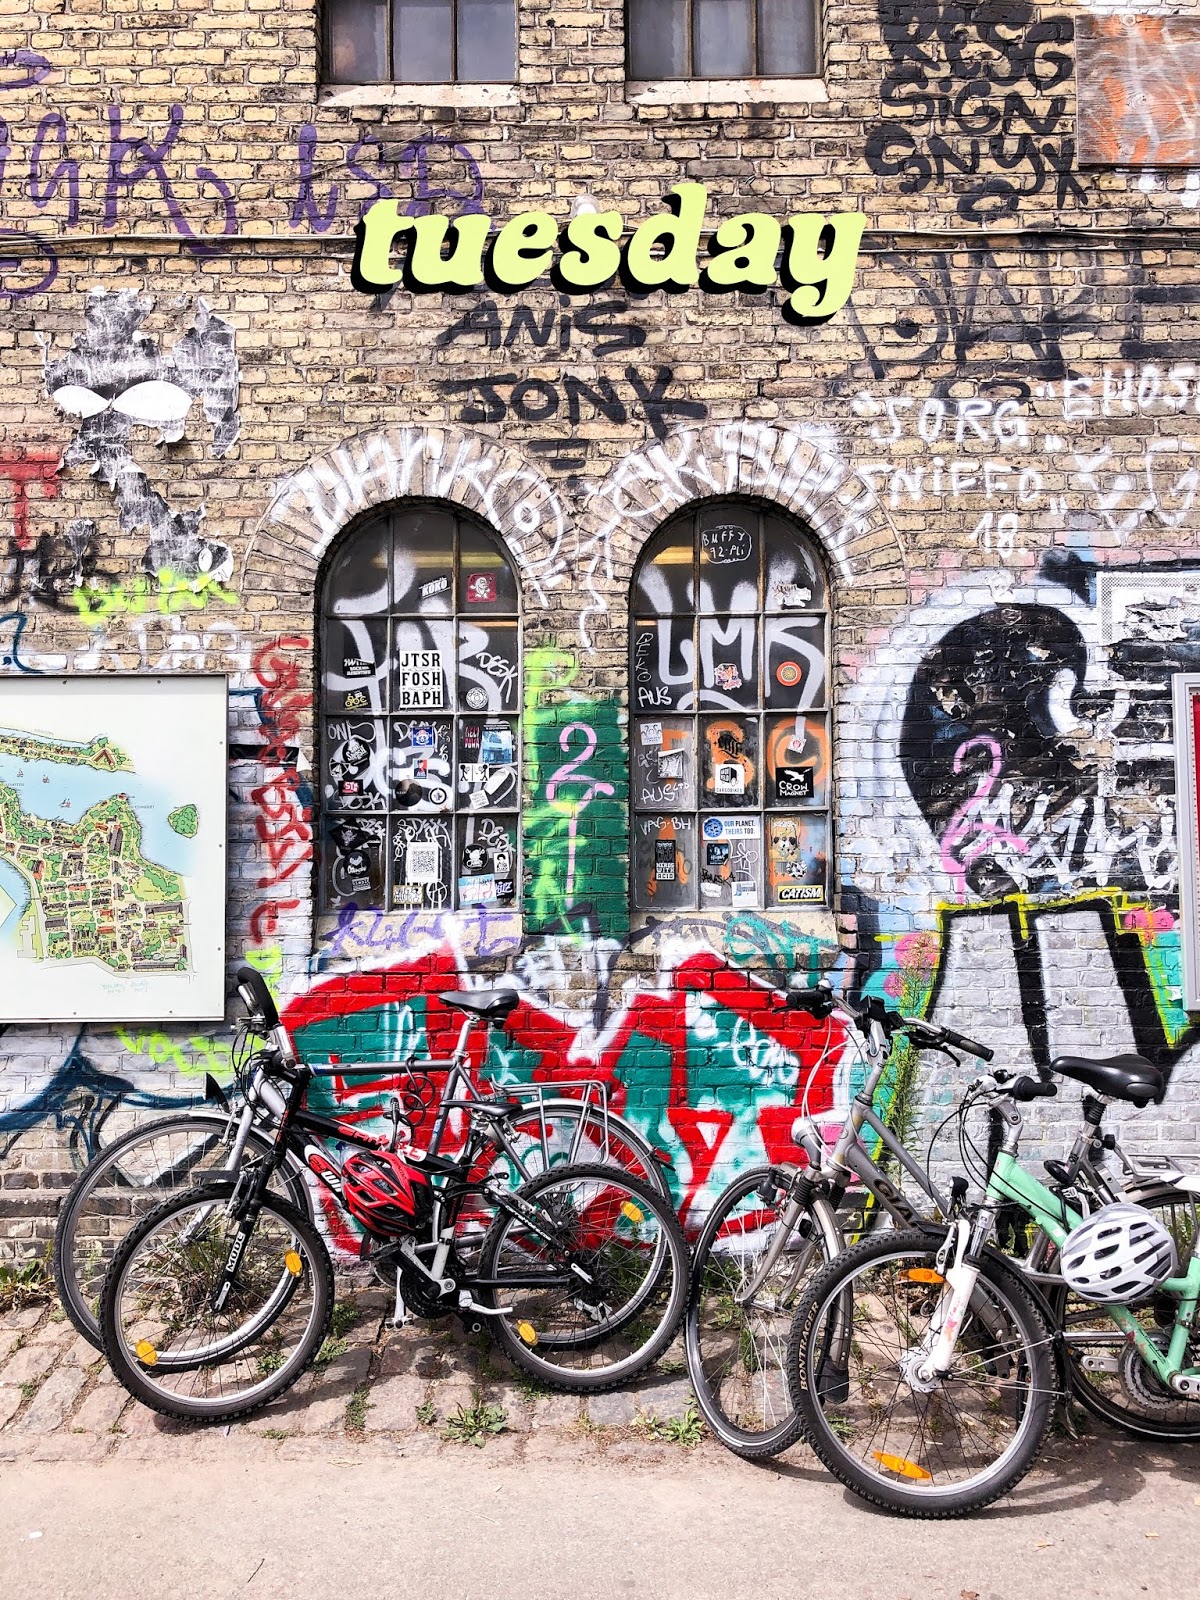 bikes against graffiti wall in Christiania, Copenhagen